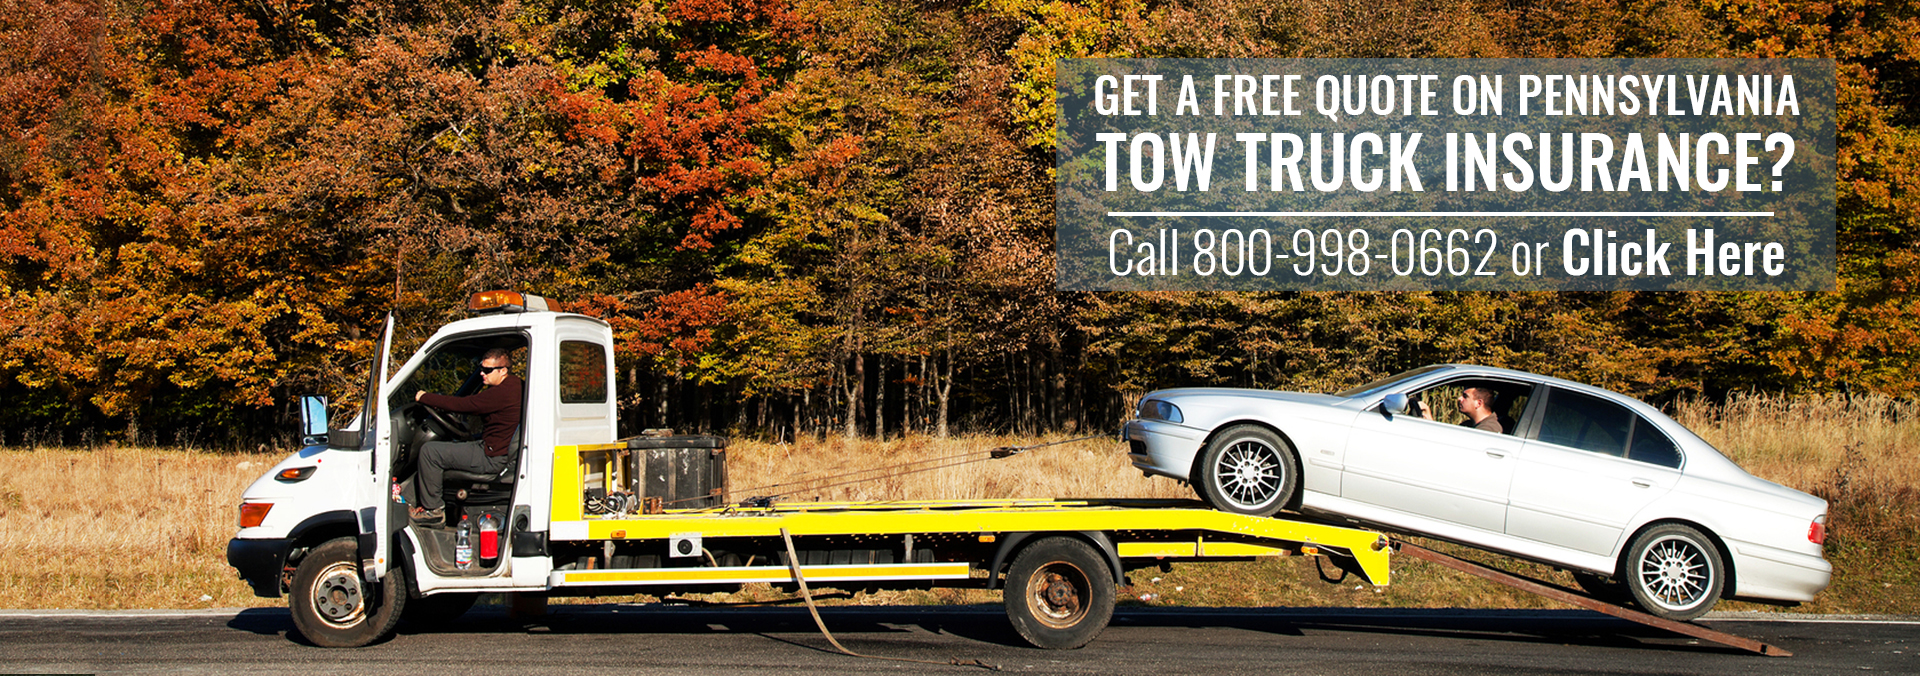 Pennsylvania Tow Truck Insurance